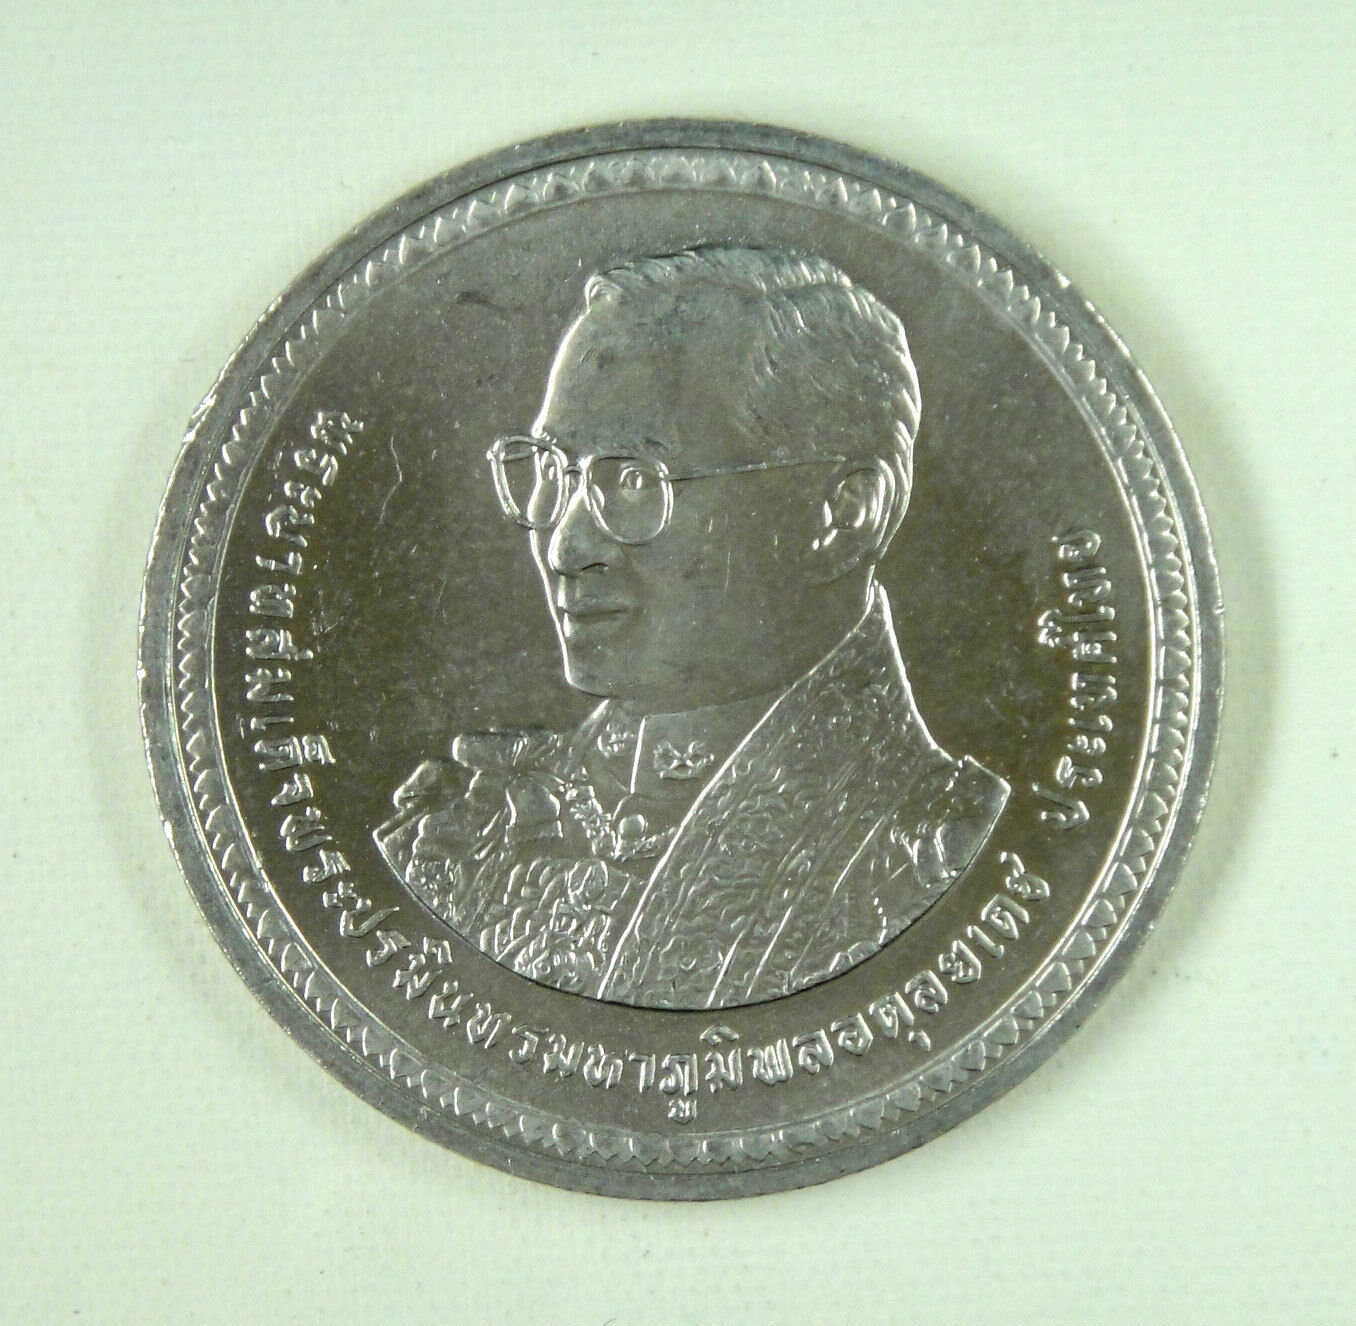 Thailand Commemorative Coin 20 Baht 2007 Unc, King's 80th Birthday